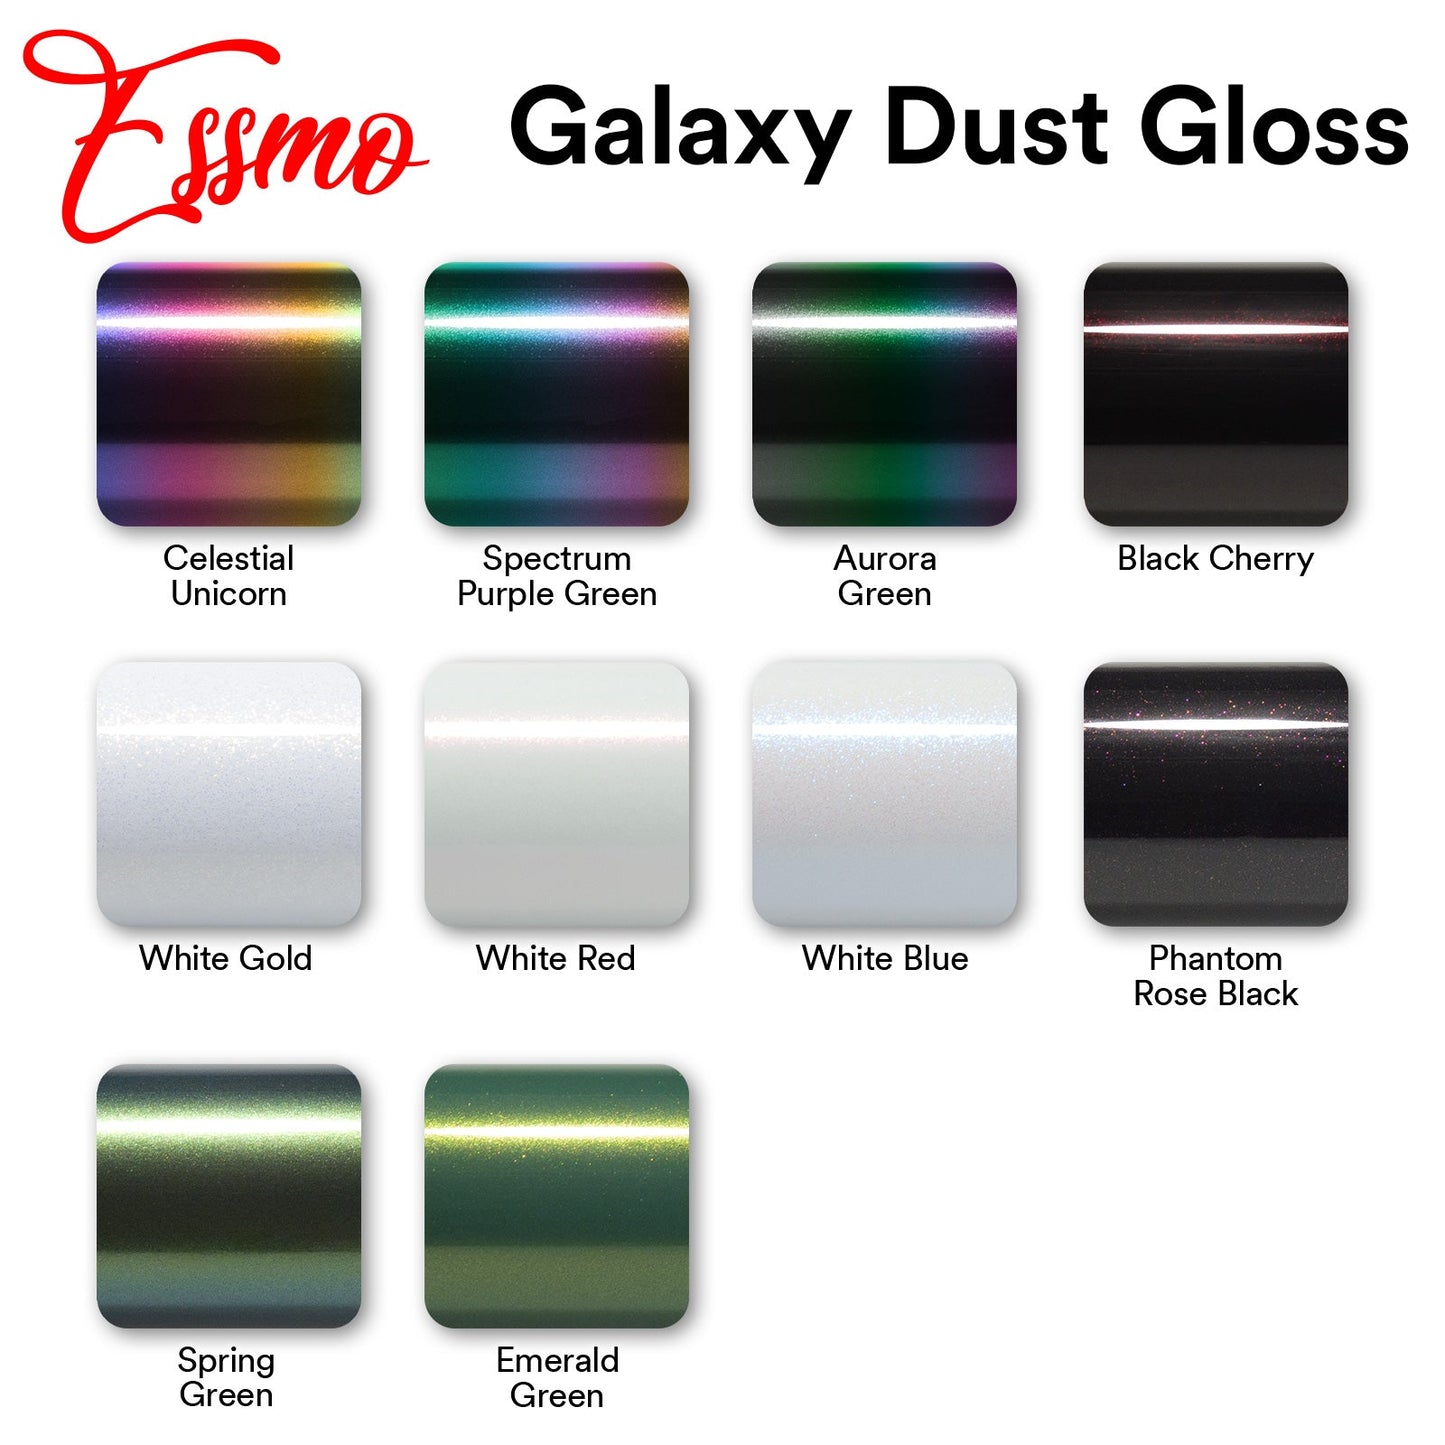 PET Galaxy Dust Gloss Aurora Green Vinyl Wrap